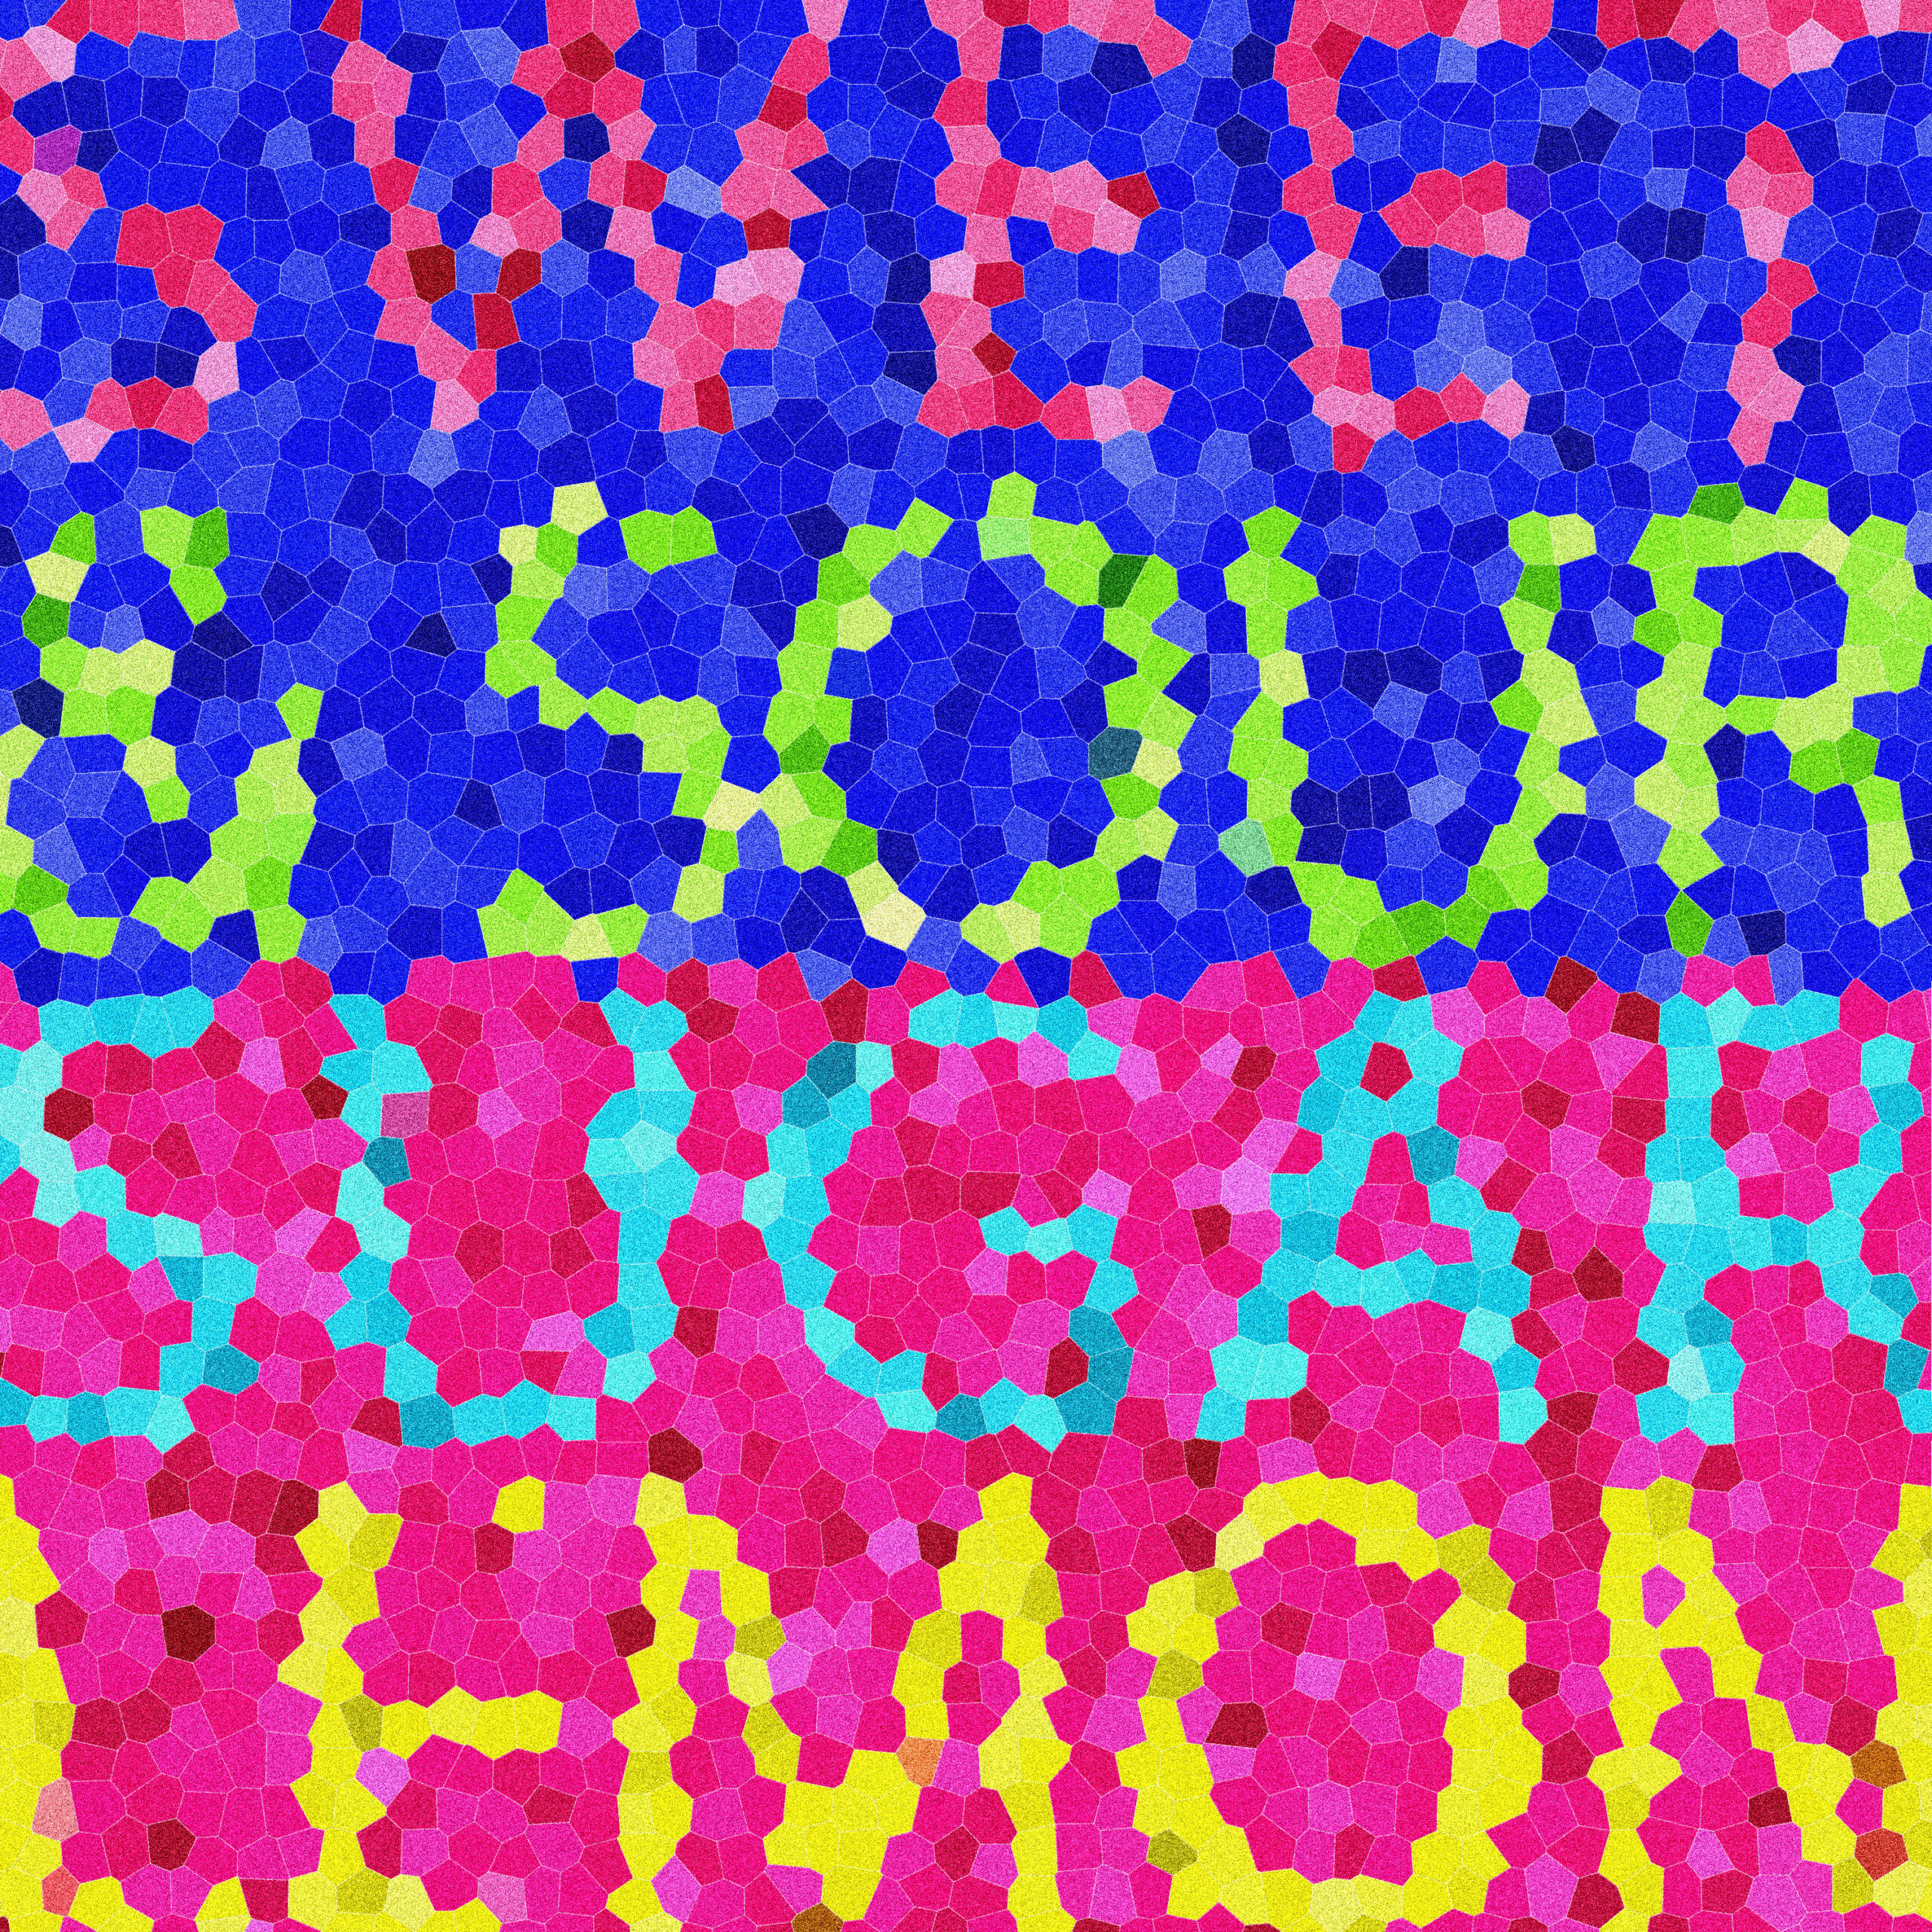 Cover art for "Sweet & Sour Sugar Lemon" by Eddie Boy